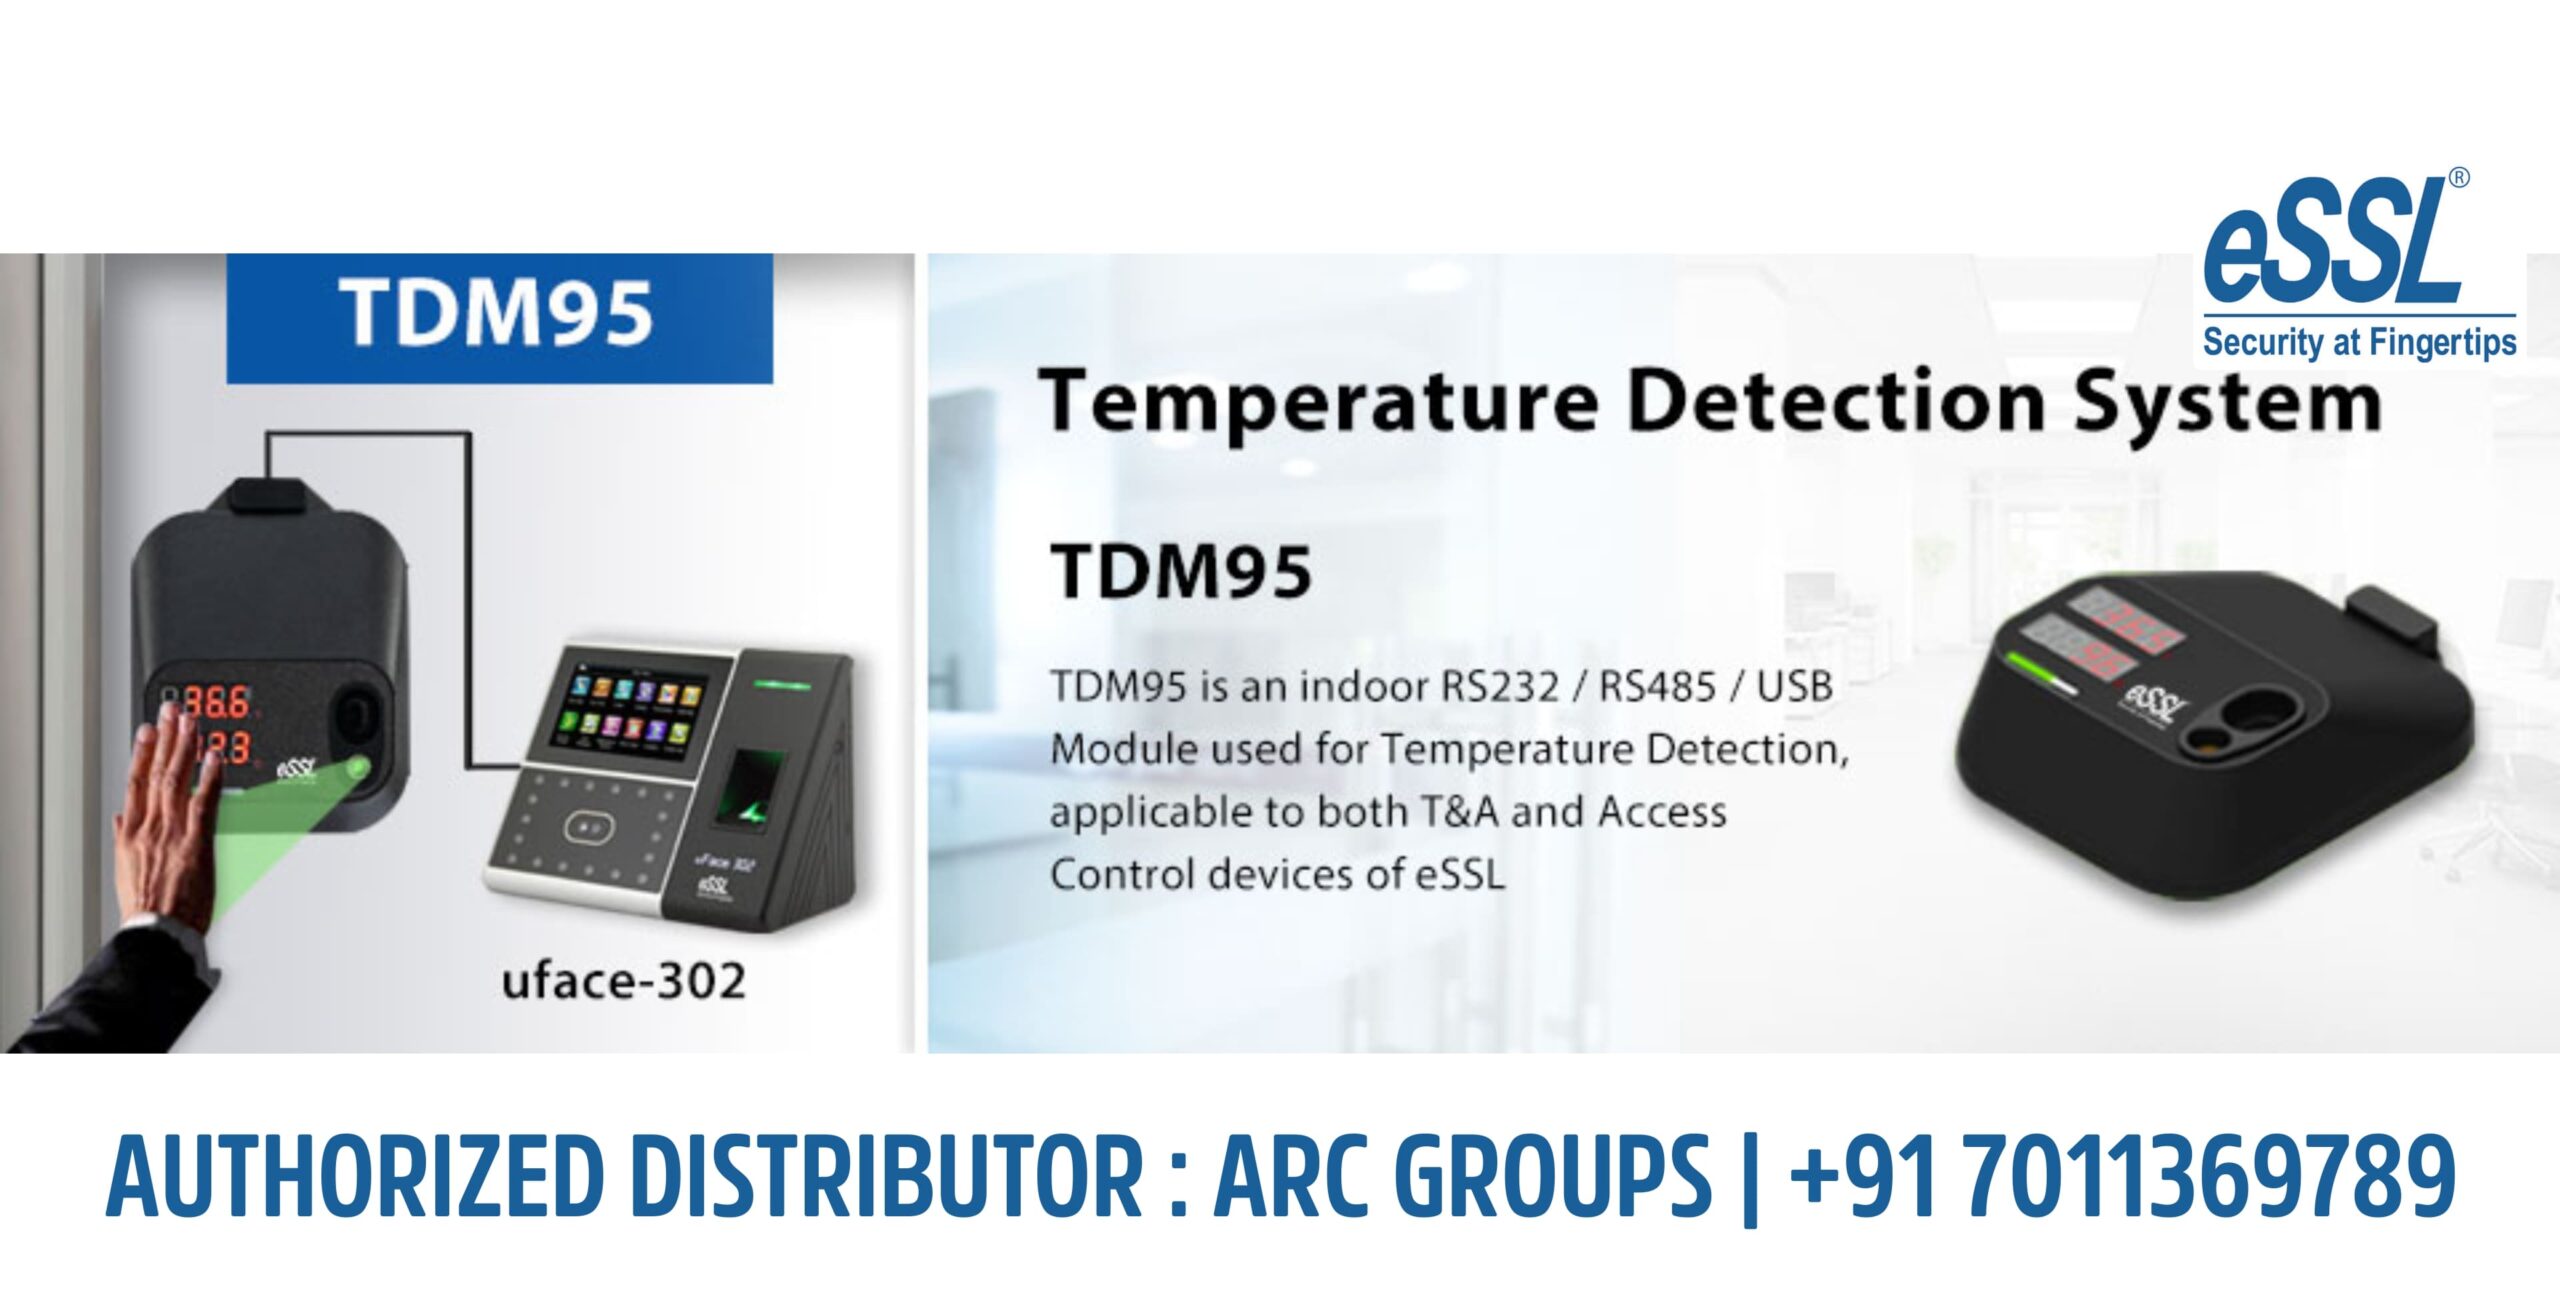 eSSL TDM95 Fast Temperature Checkup System